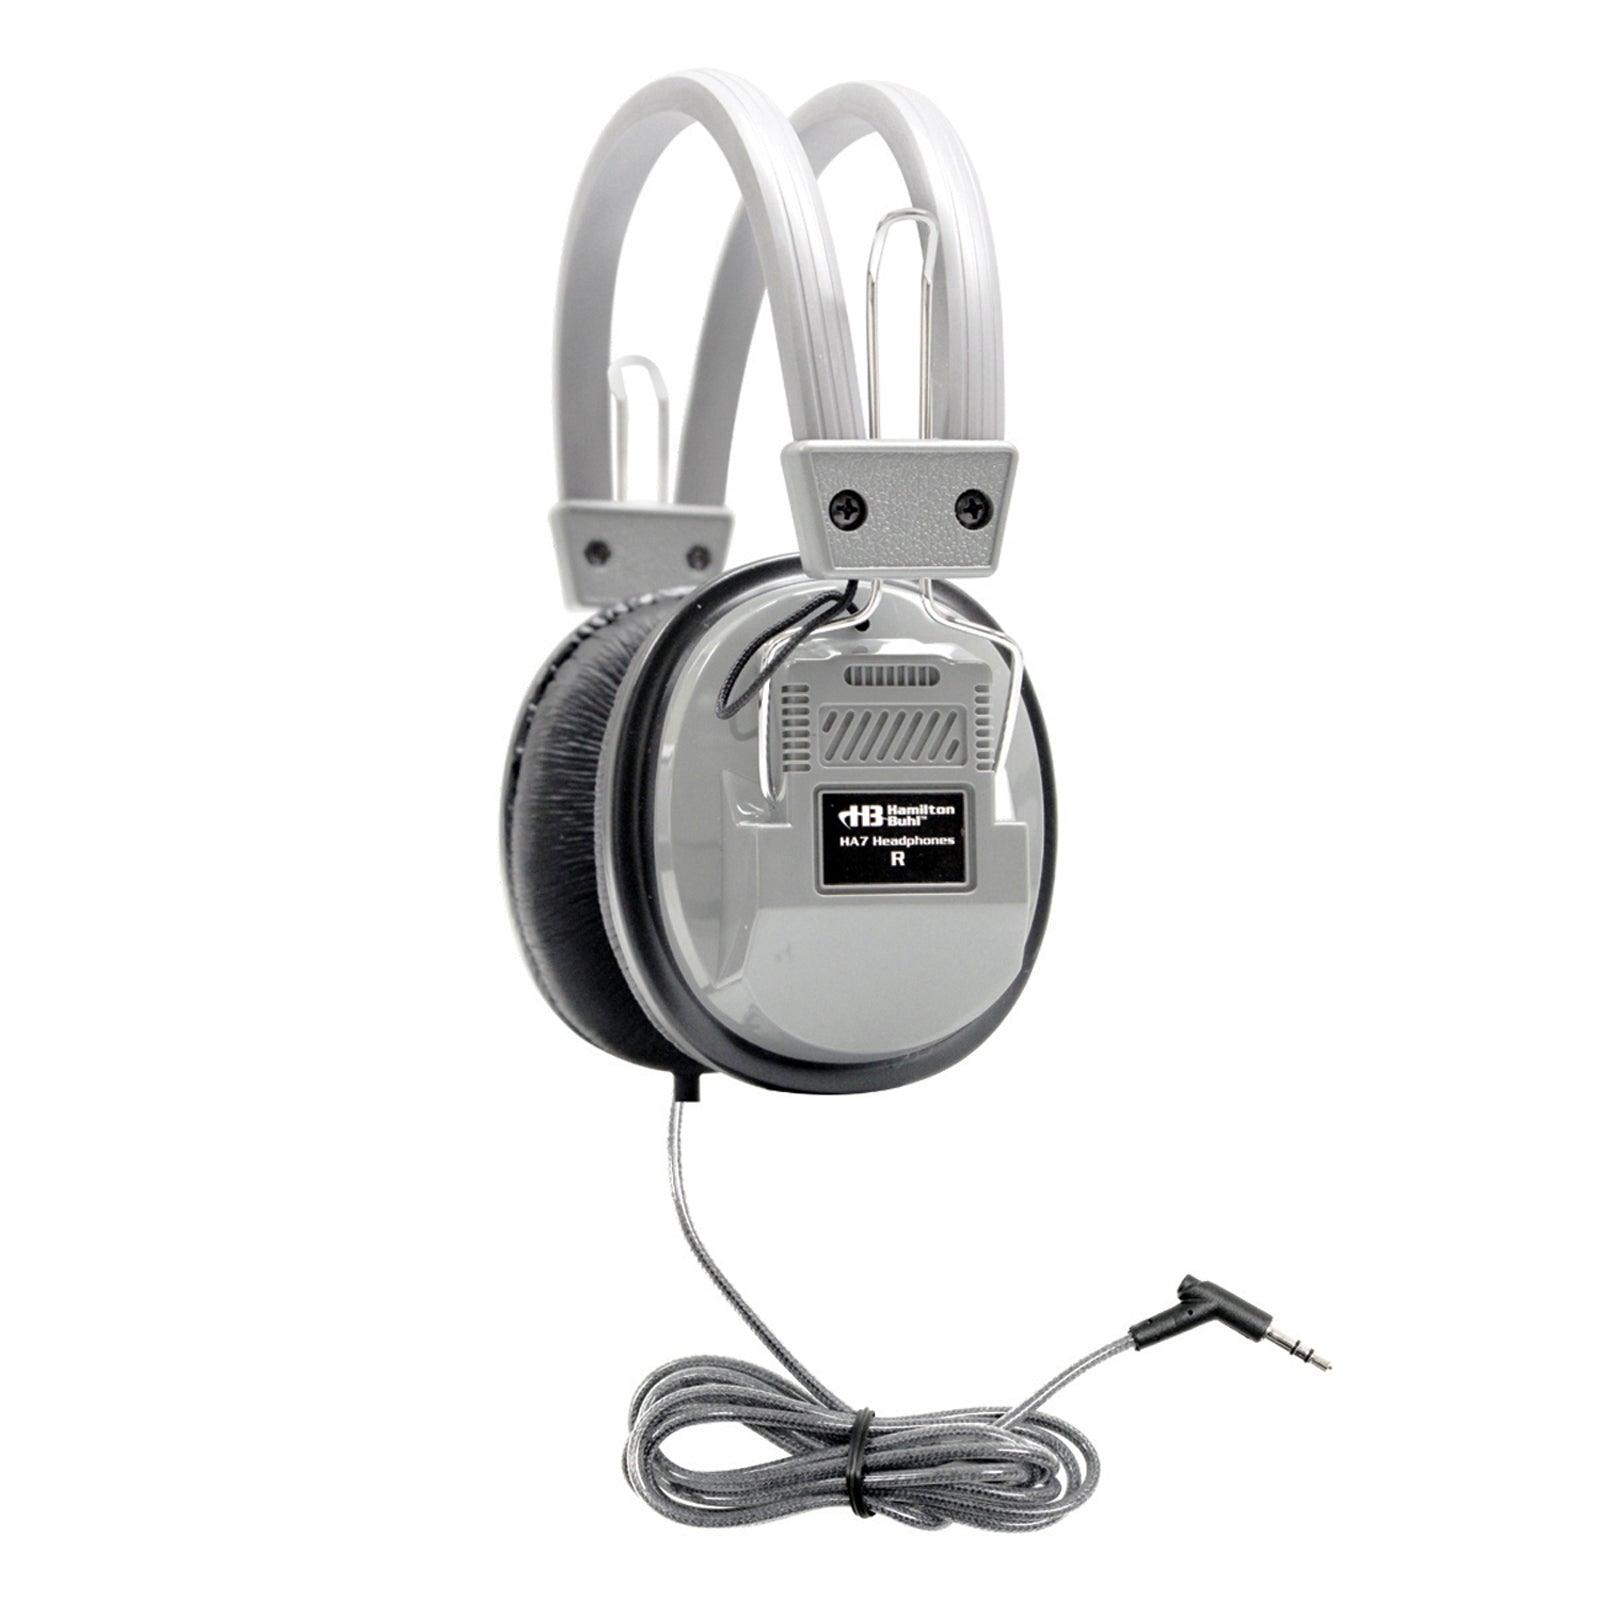 SchoolMate Deluxe Stereo Headphone with 3.5mm Plug - Loomini